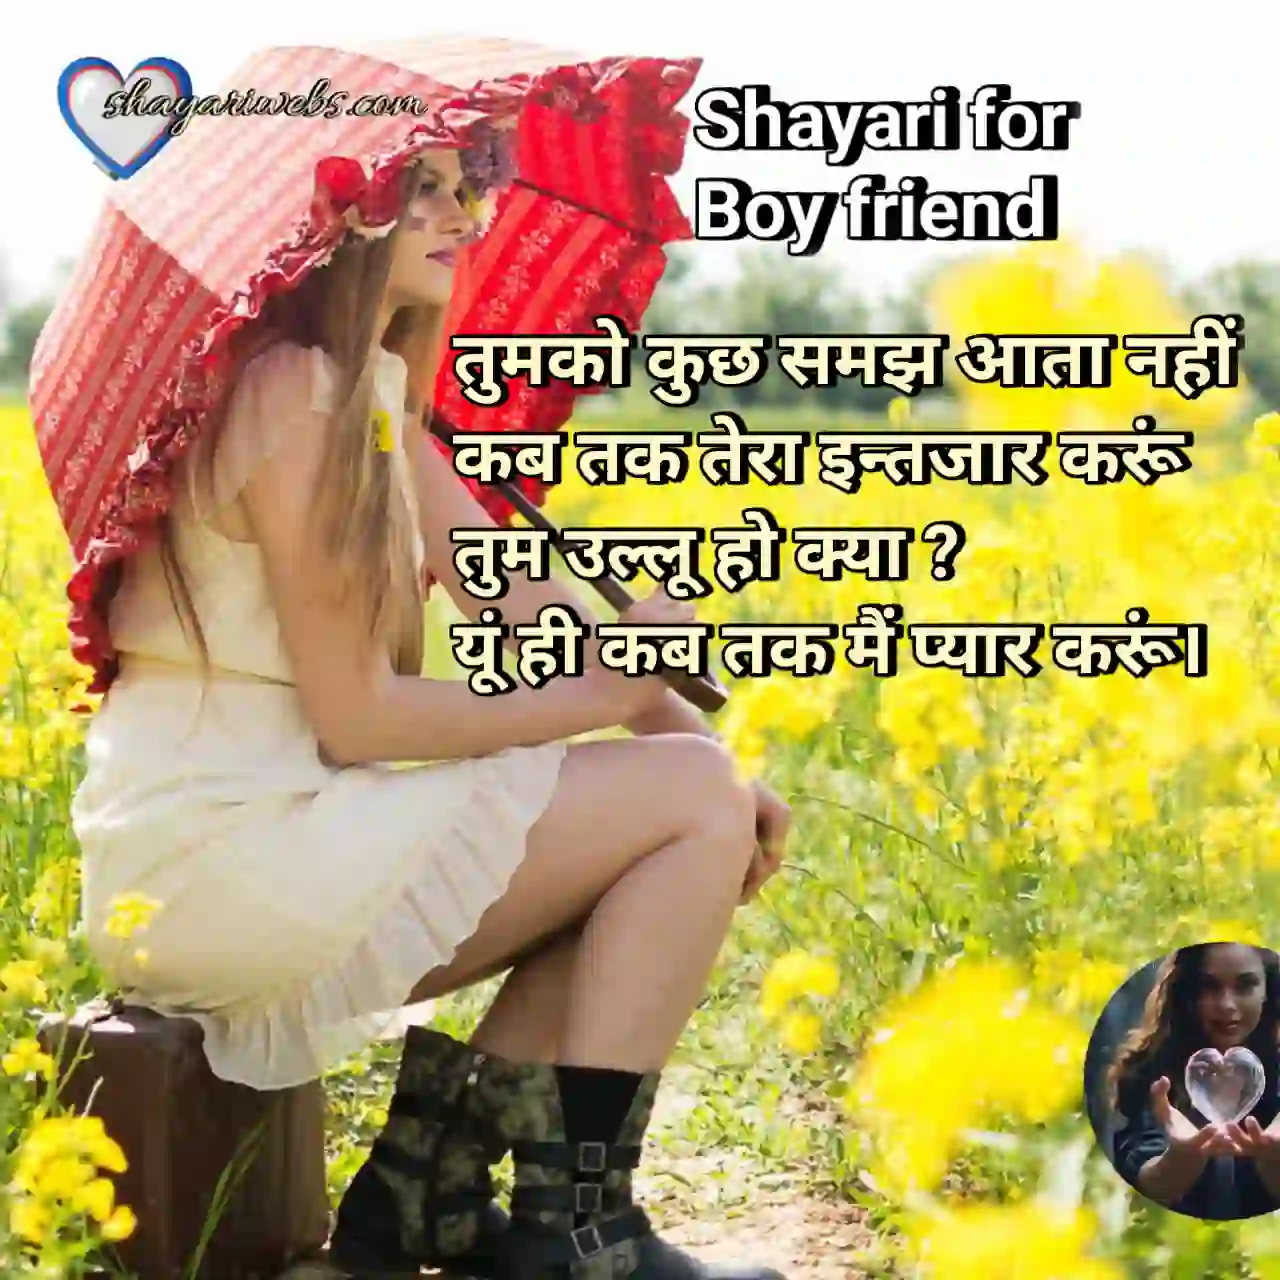 New shayari for boy friend 